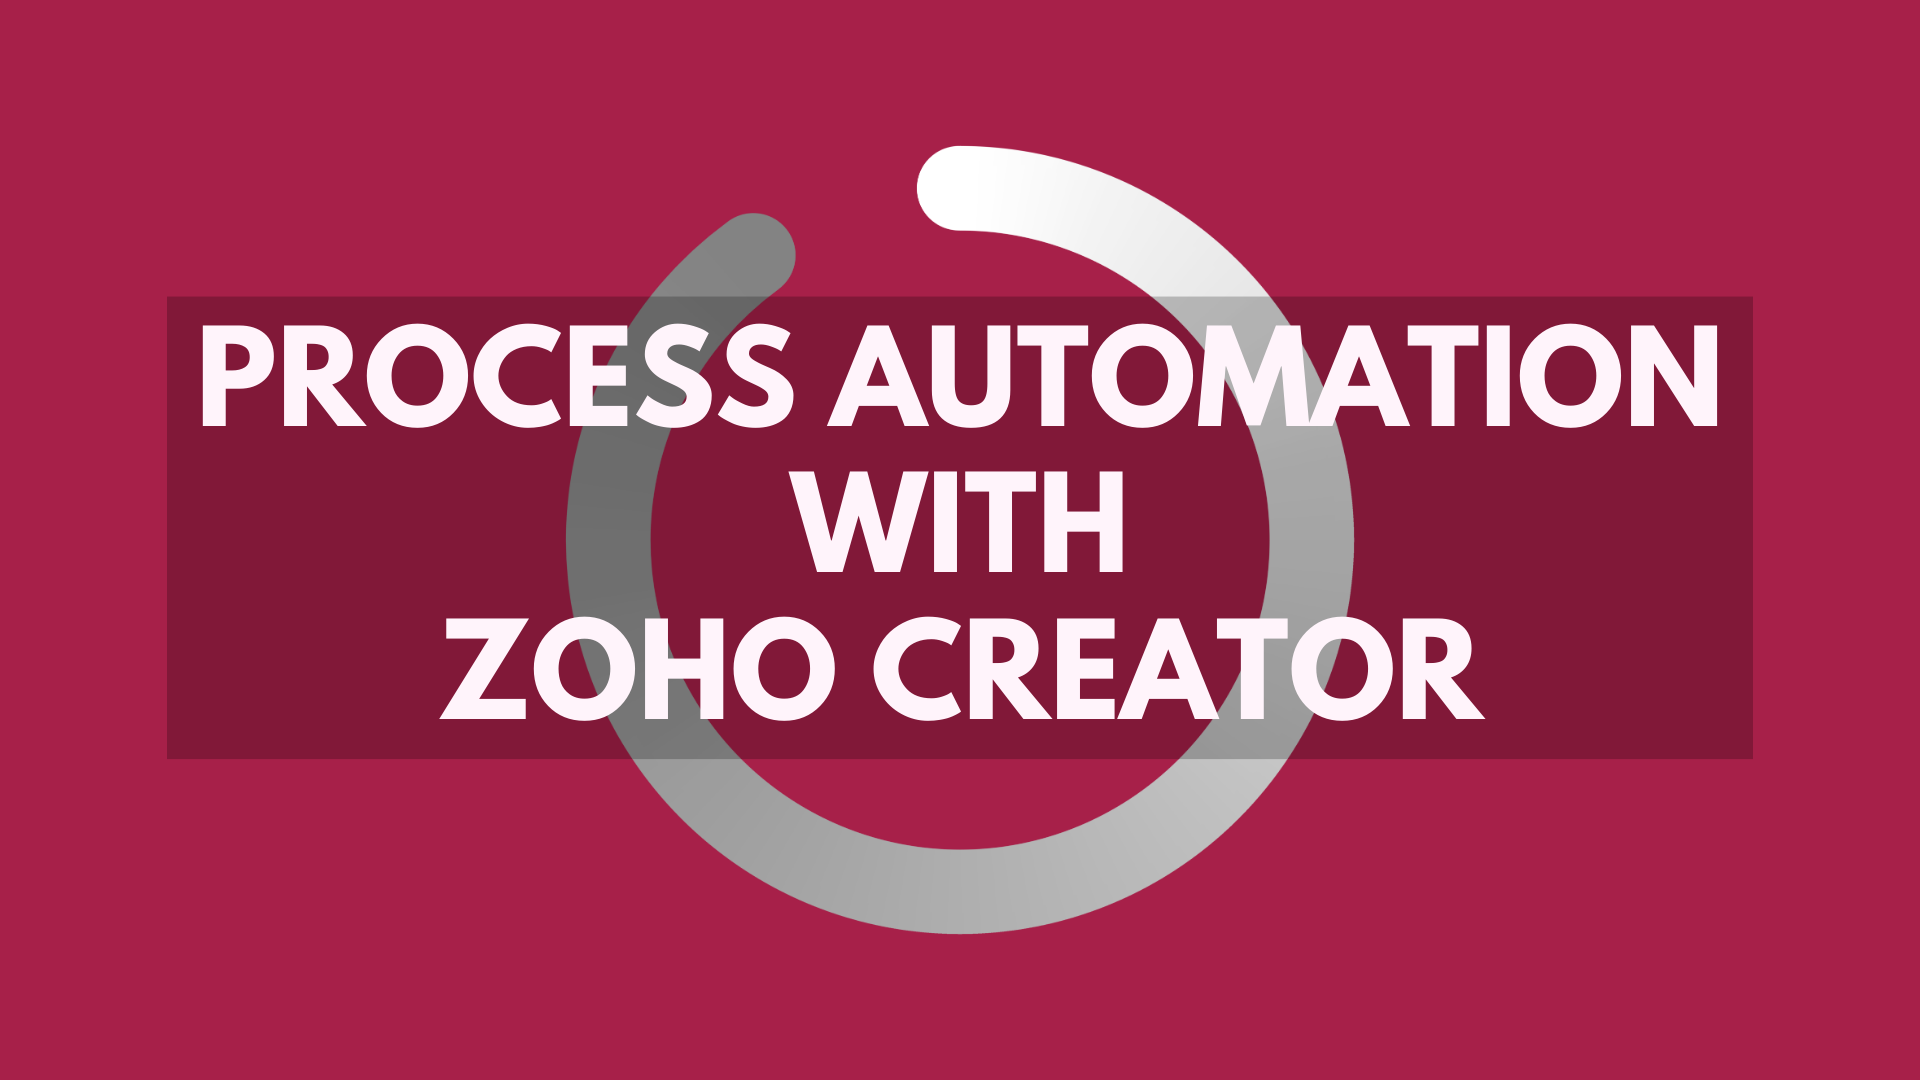 Process automation with zoho creator